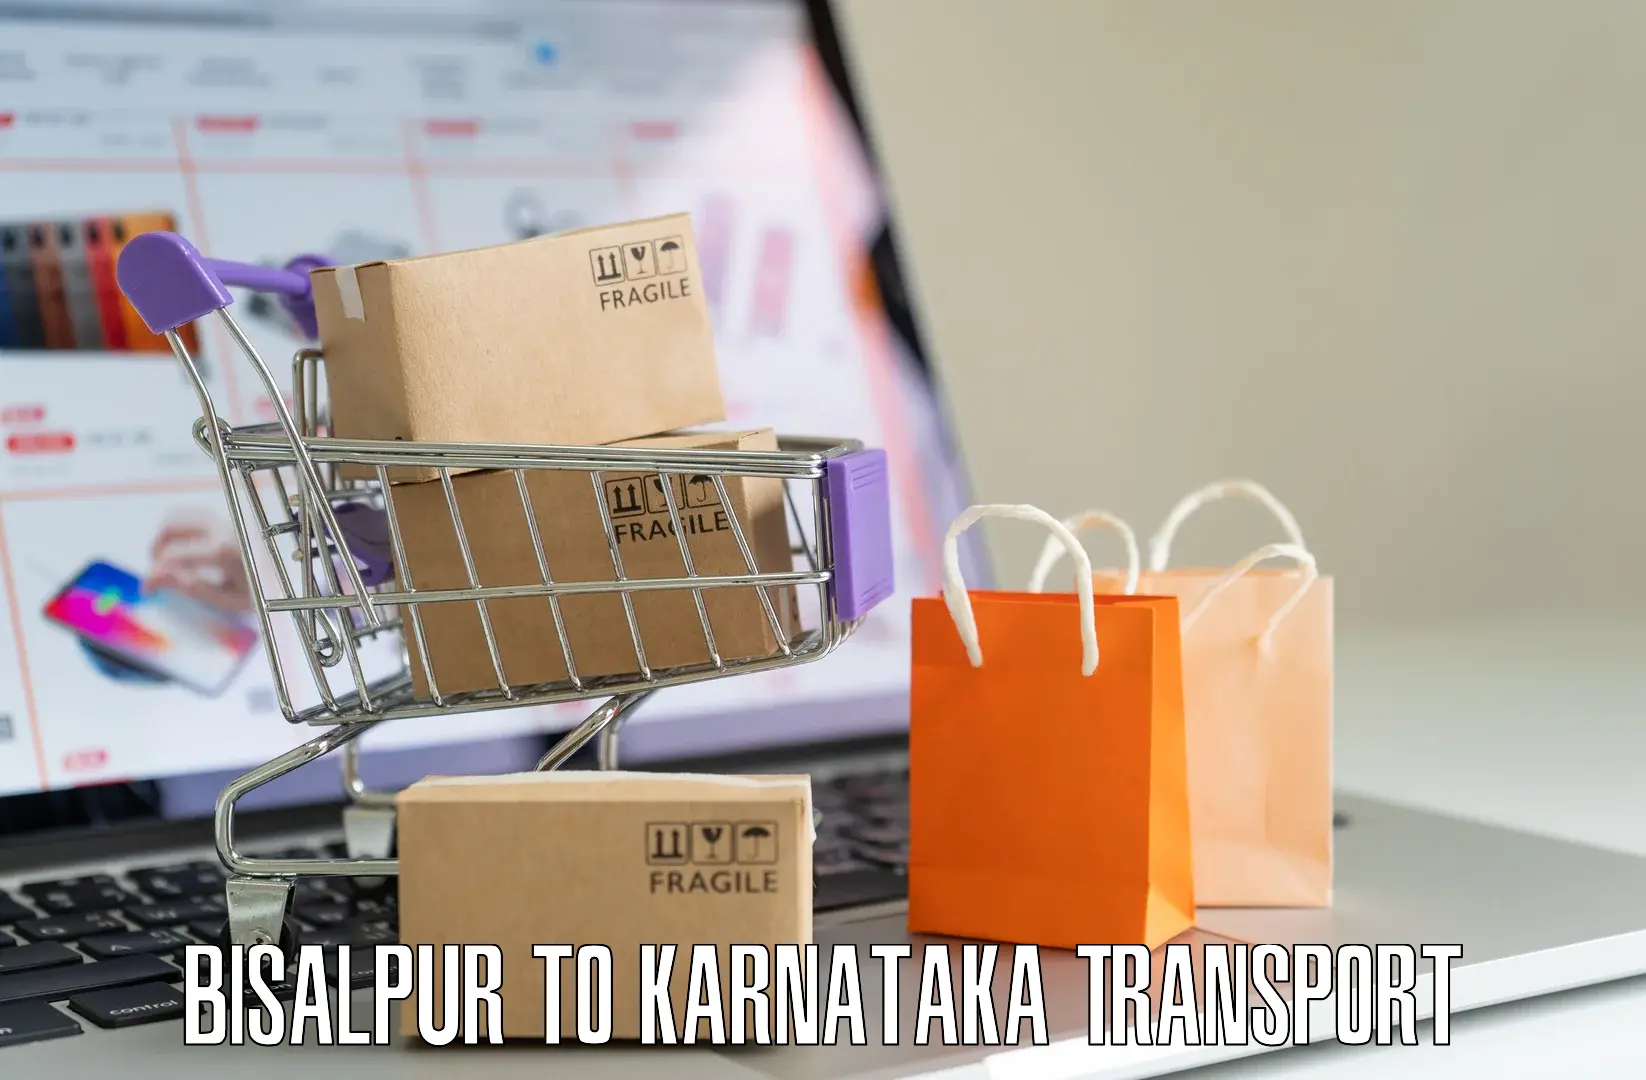 Daily transport service Bisalpur to Karnataka